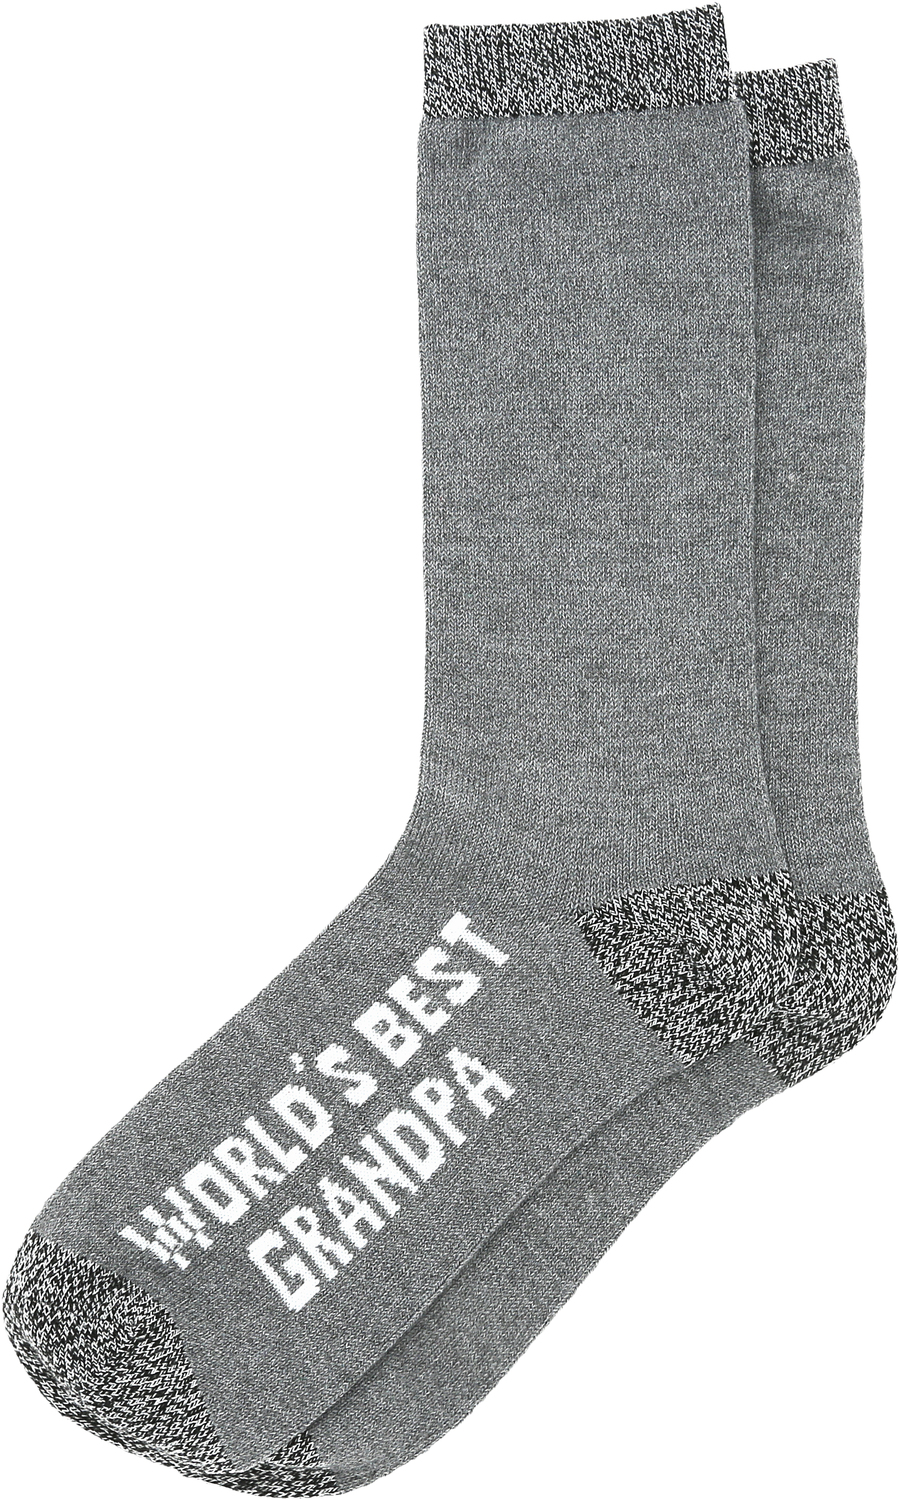 Grandpa by Man Made - Grandpa - Men's Socks